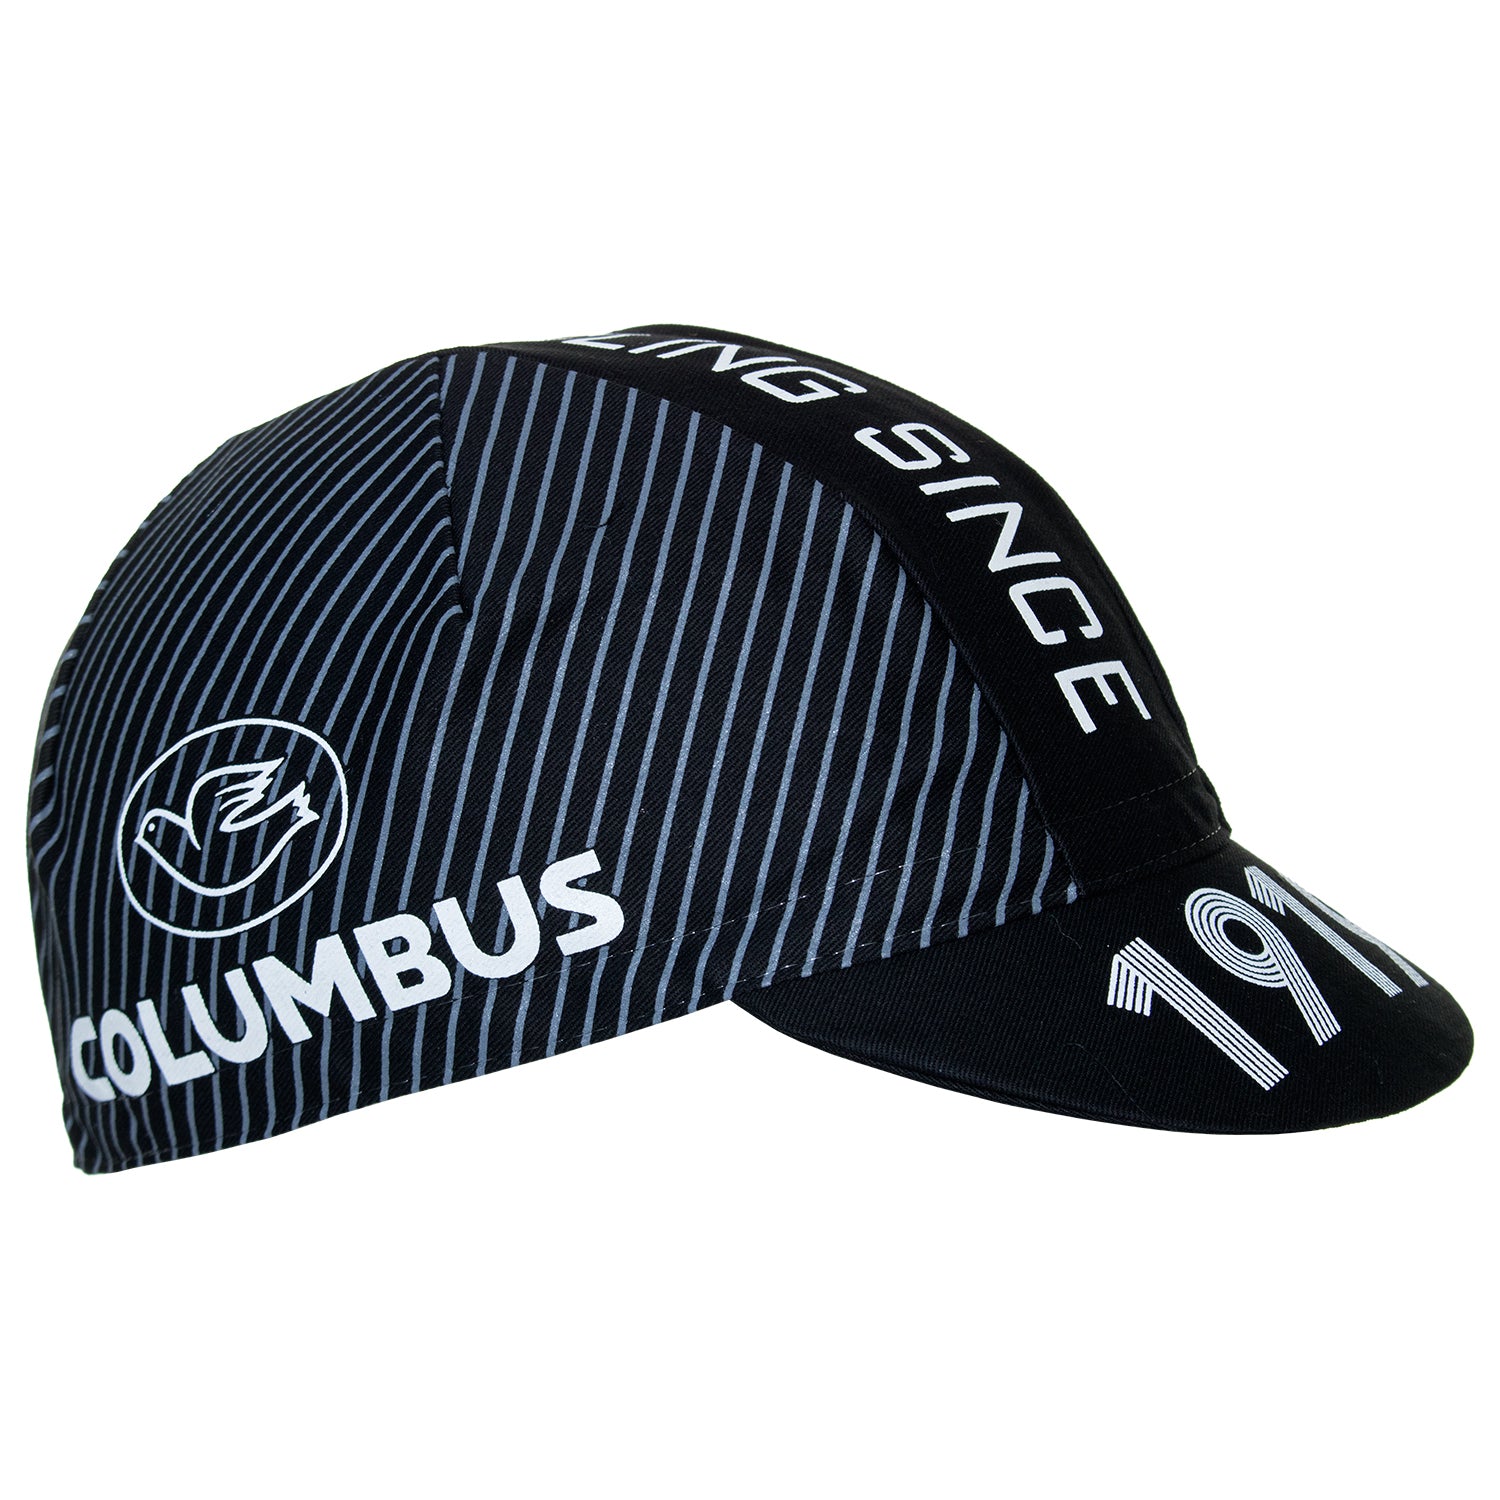 columbus cycling cap